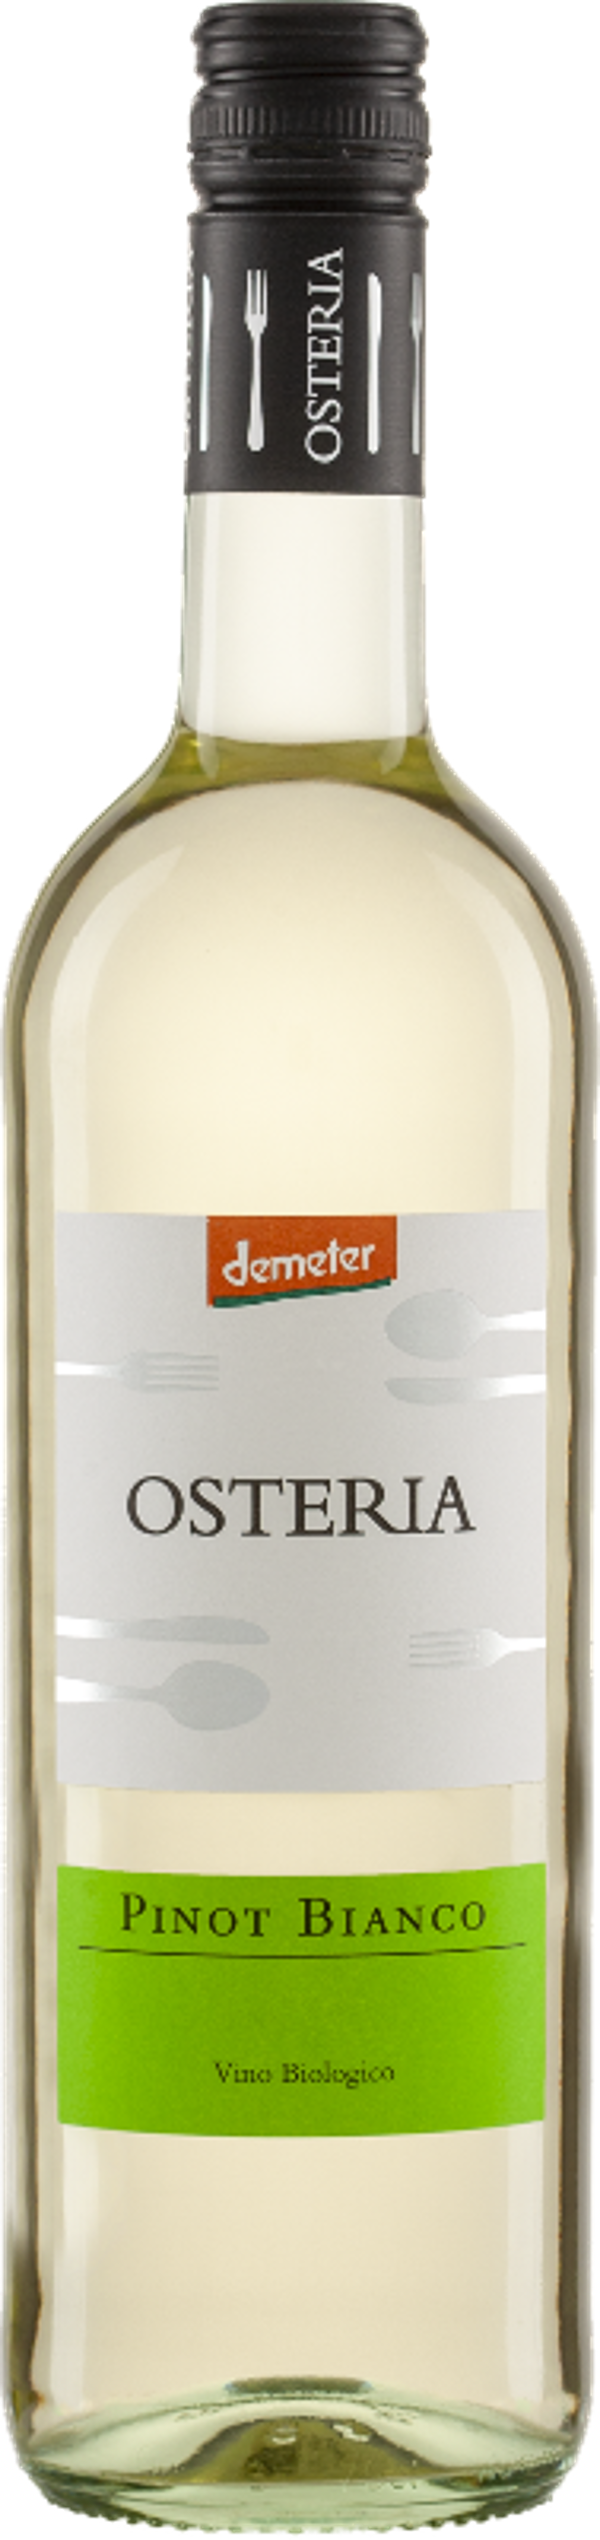 Produktfoto zu OSTERIA Pinot Bianco IGT Demeter